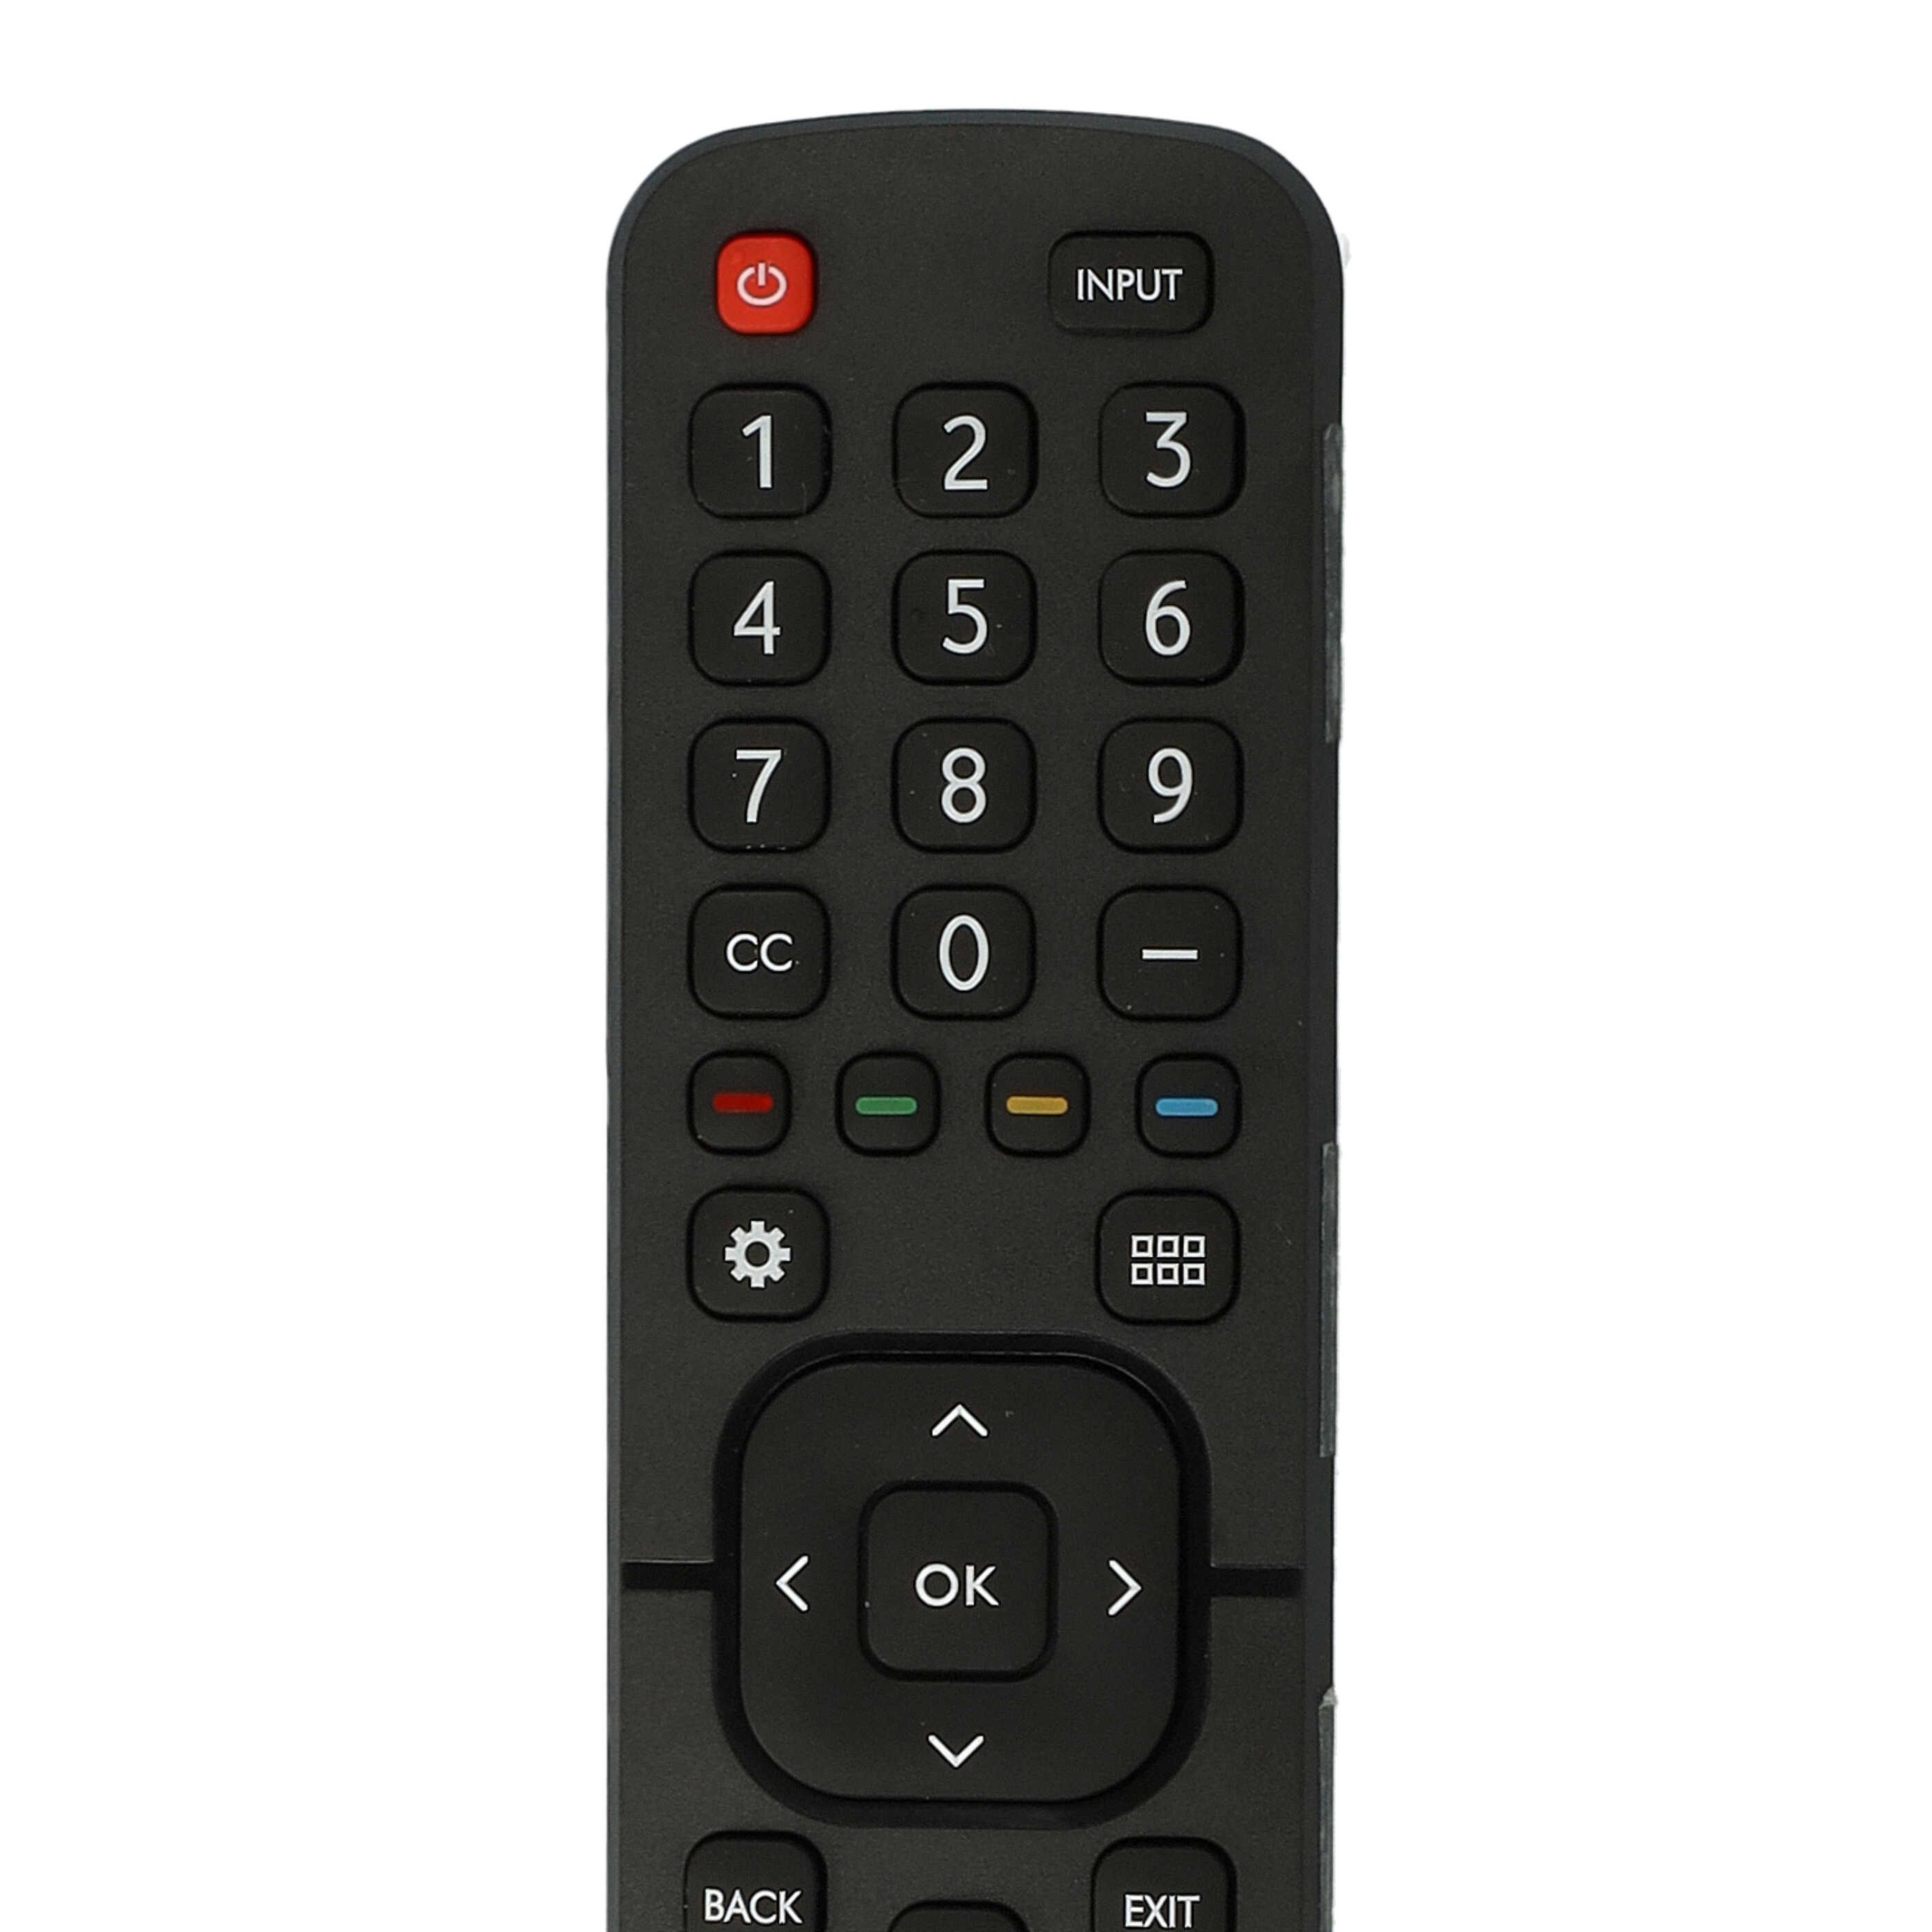 Remote Control replaces Hisense EN2A27 for Hisense TV